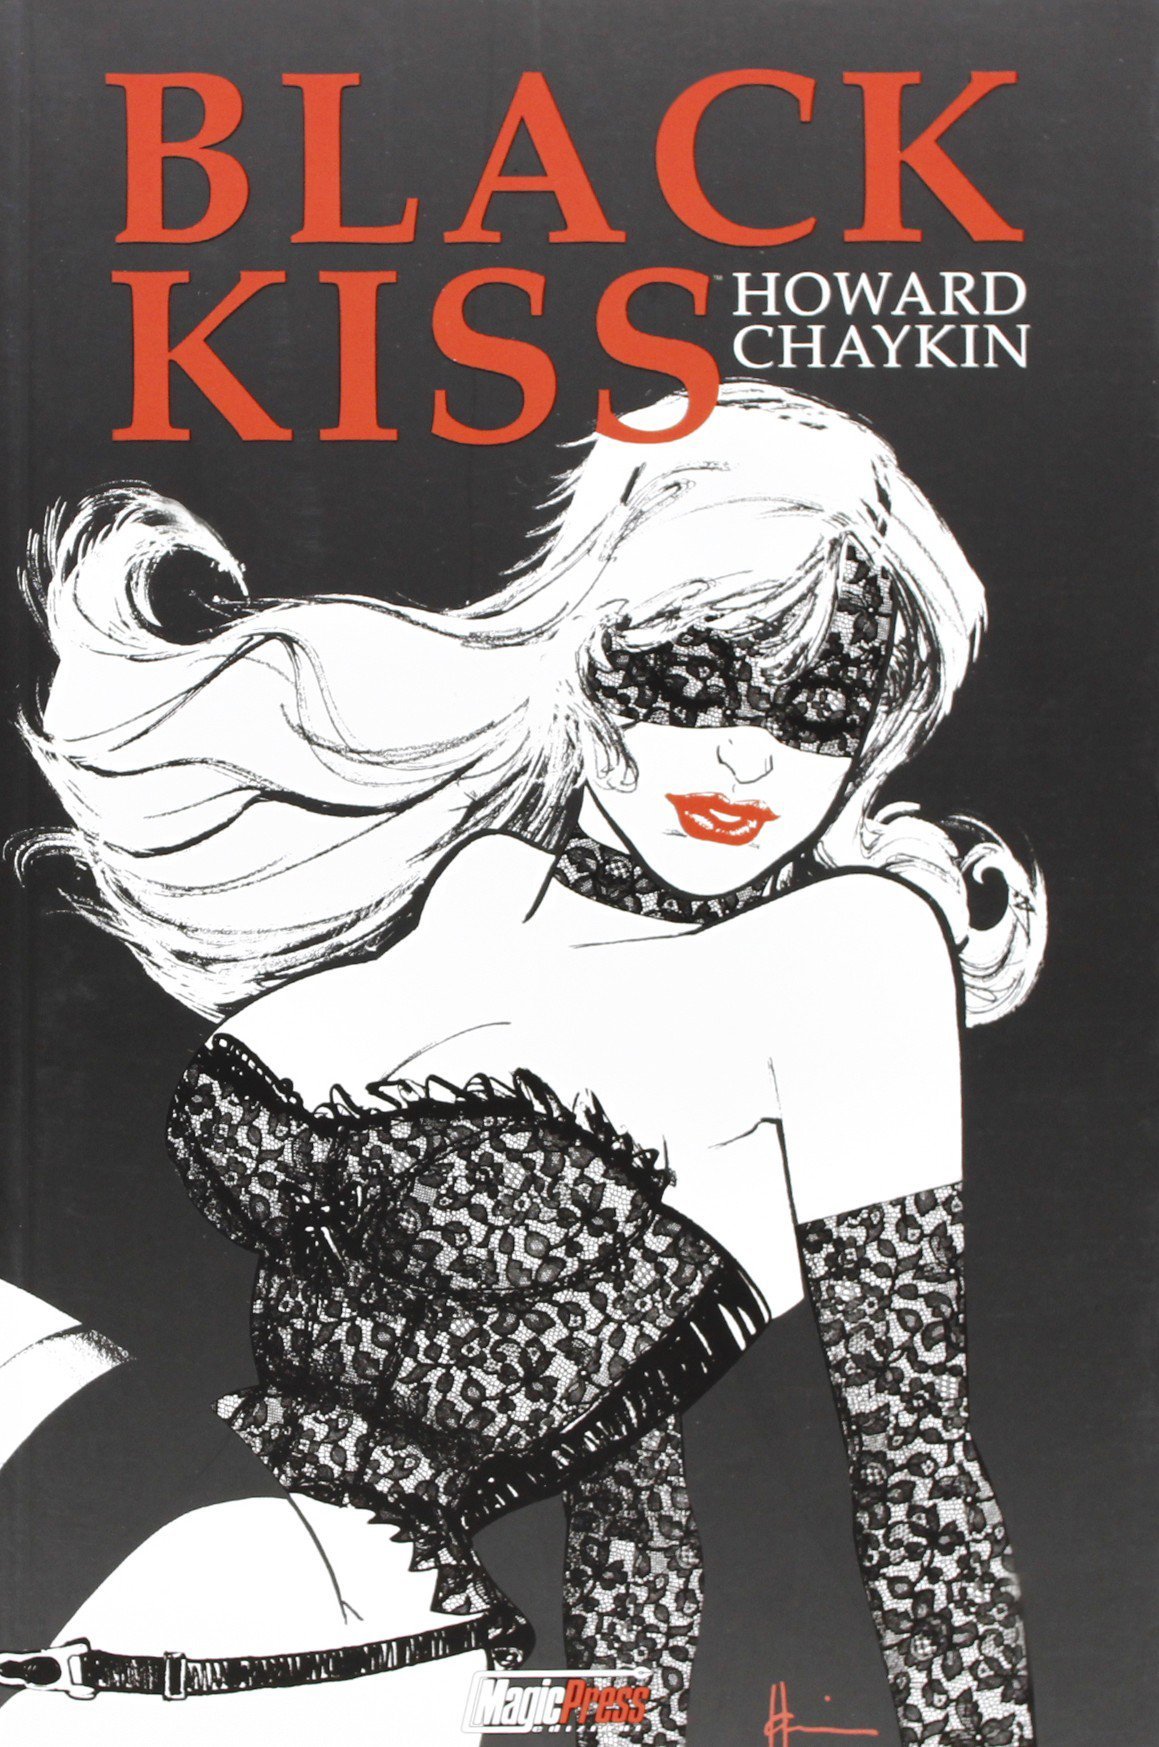 chaykin-black kiss